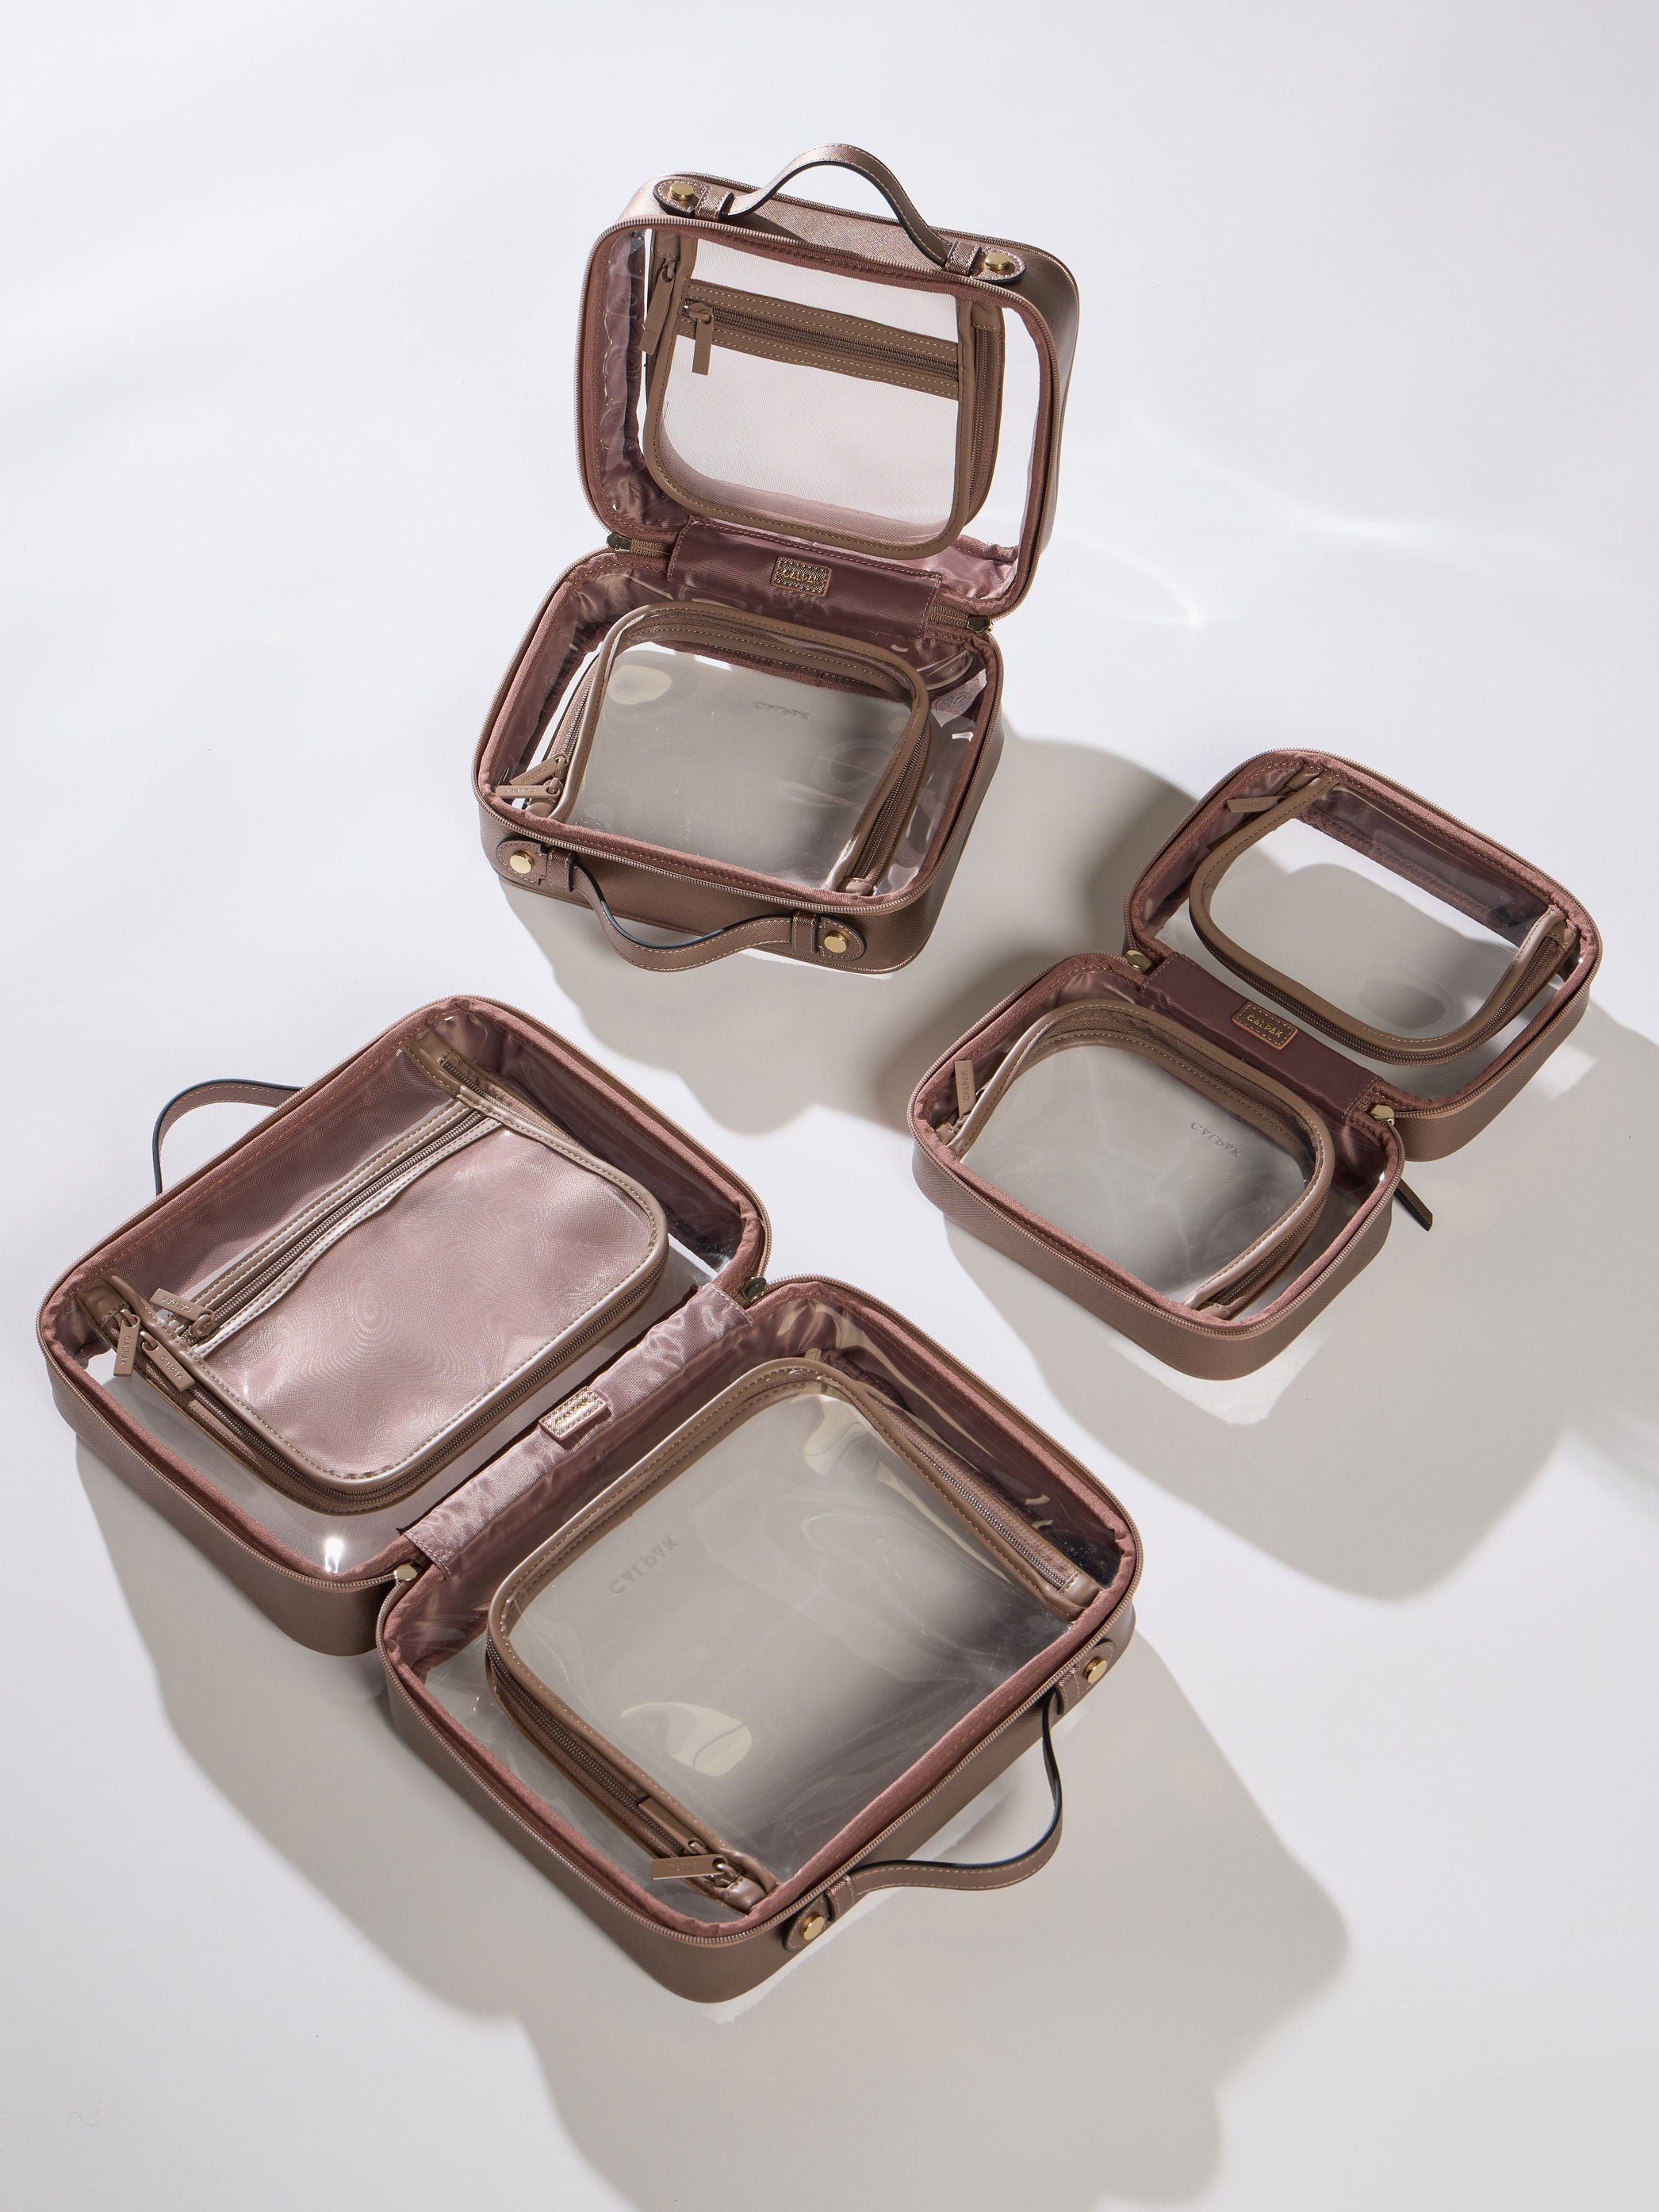 CALPAK Large Clear Cosmetic Case, Medium Clear Cosmetic Case, and Small Clear Cosmetic Case in bronze